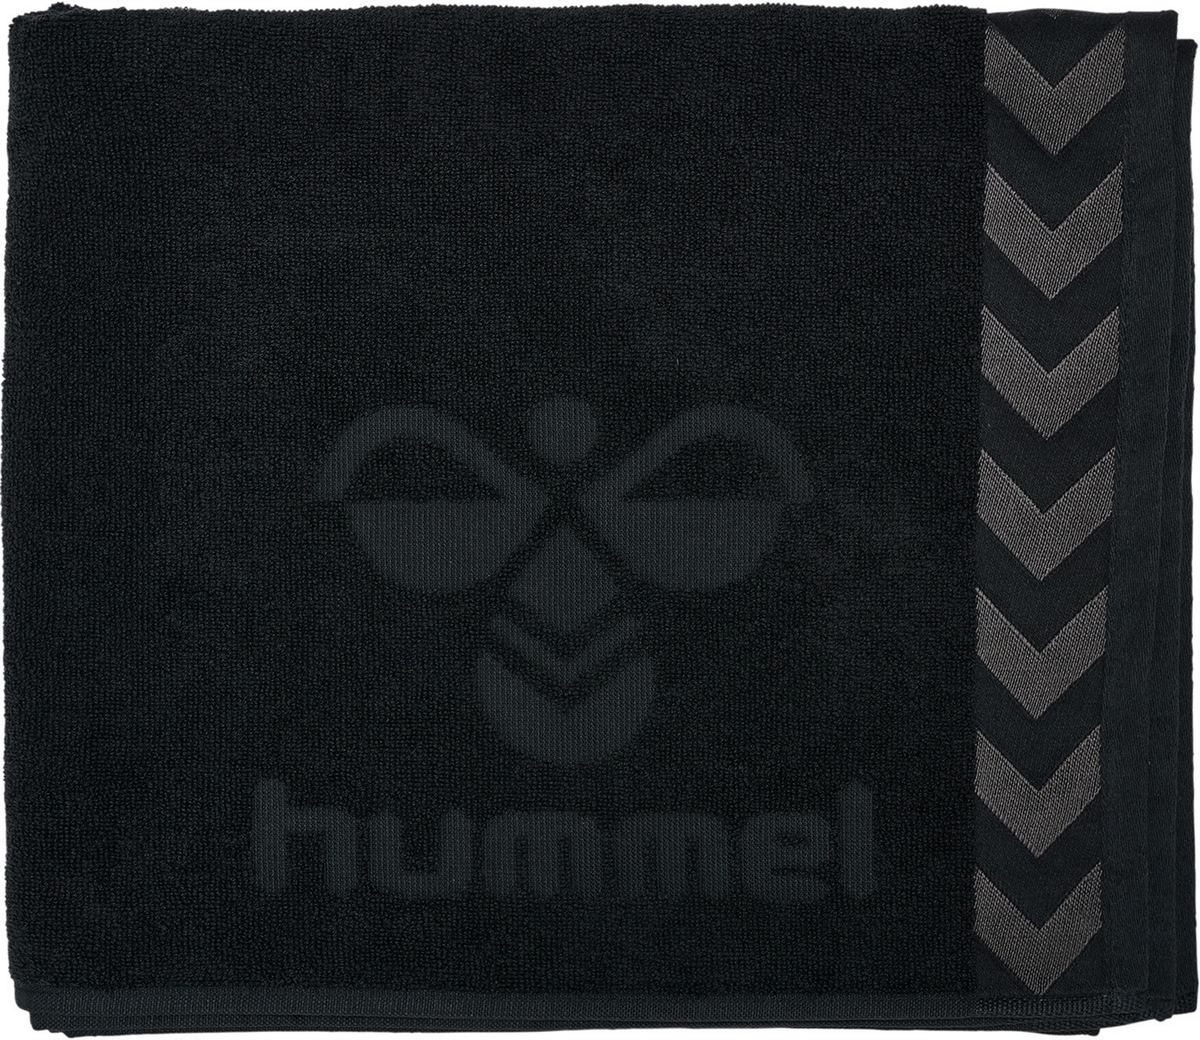 HUMMEL GRANDE SERVIETTE 160x70 cm - Black